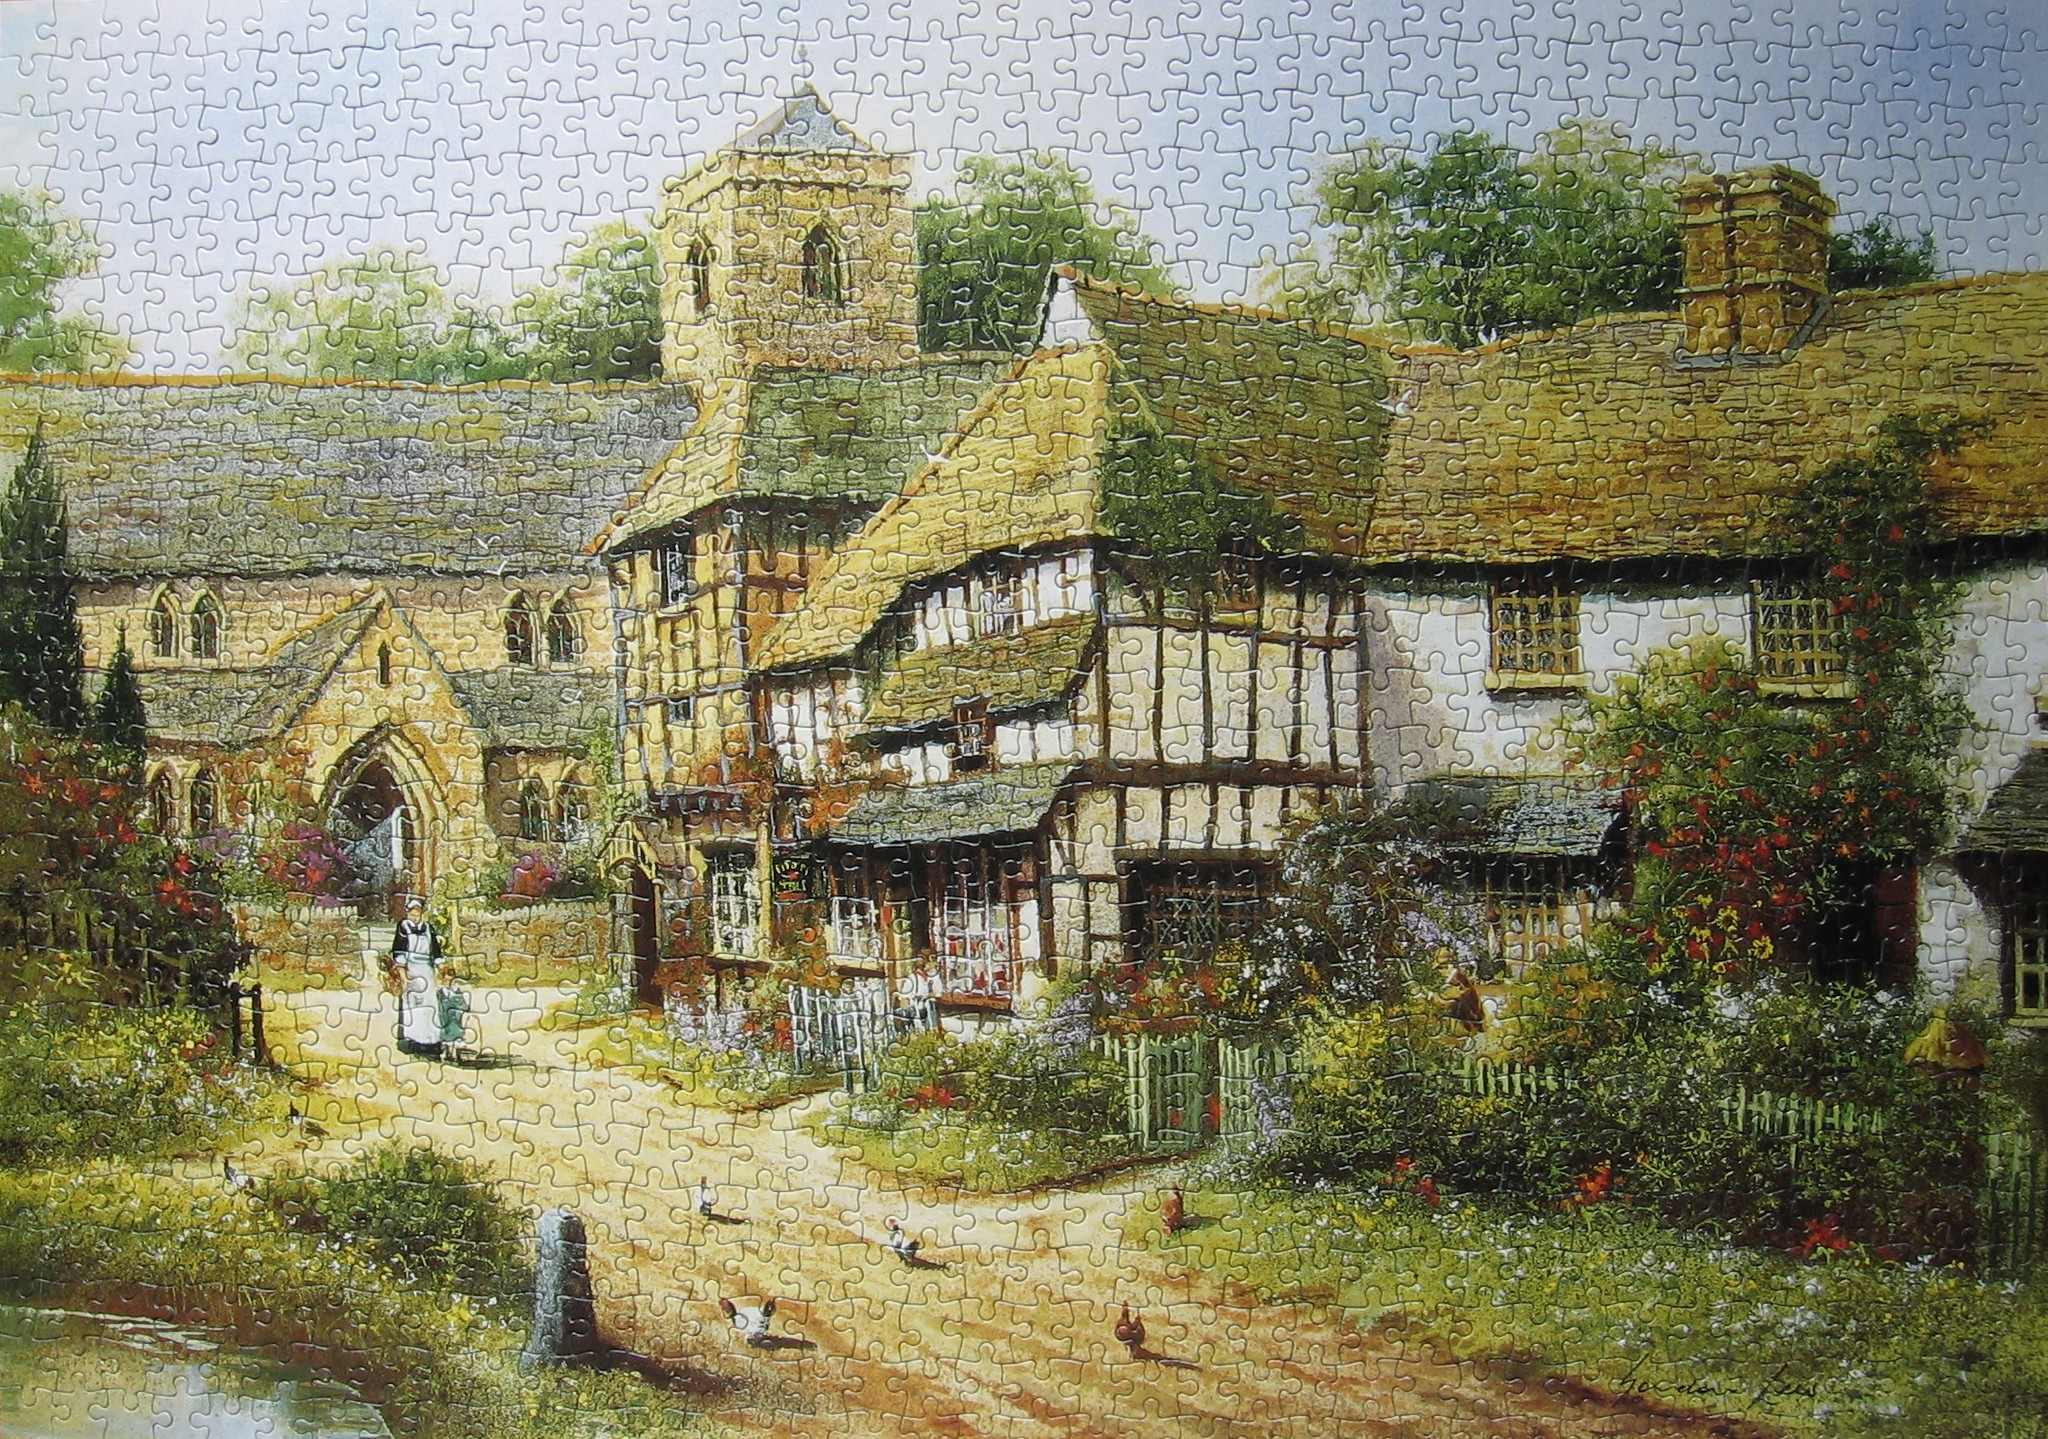 Village, England (Gordon Lees) (1000) .